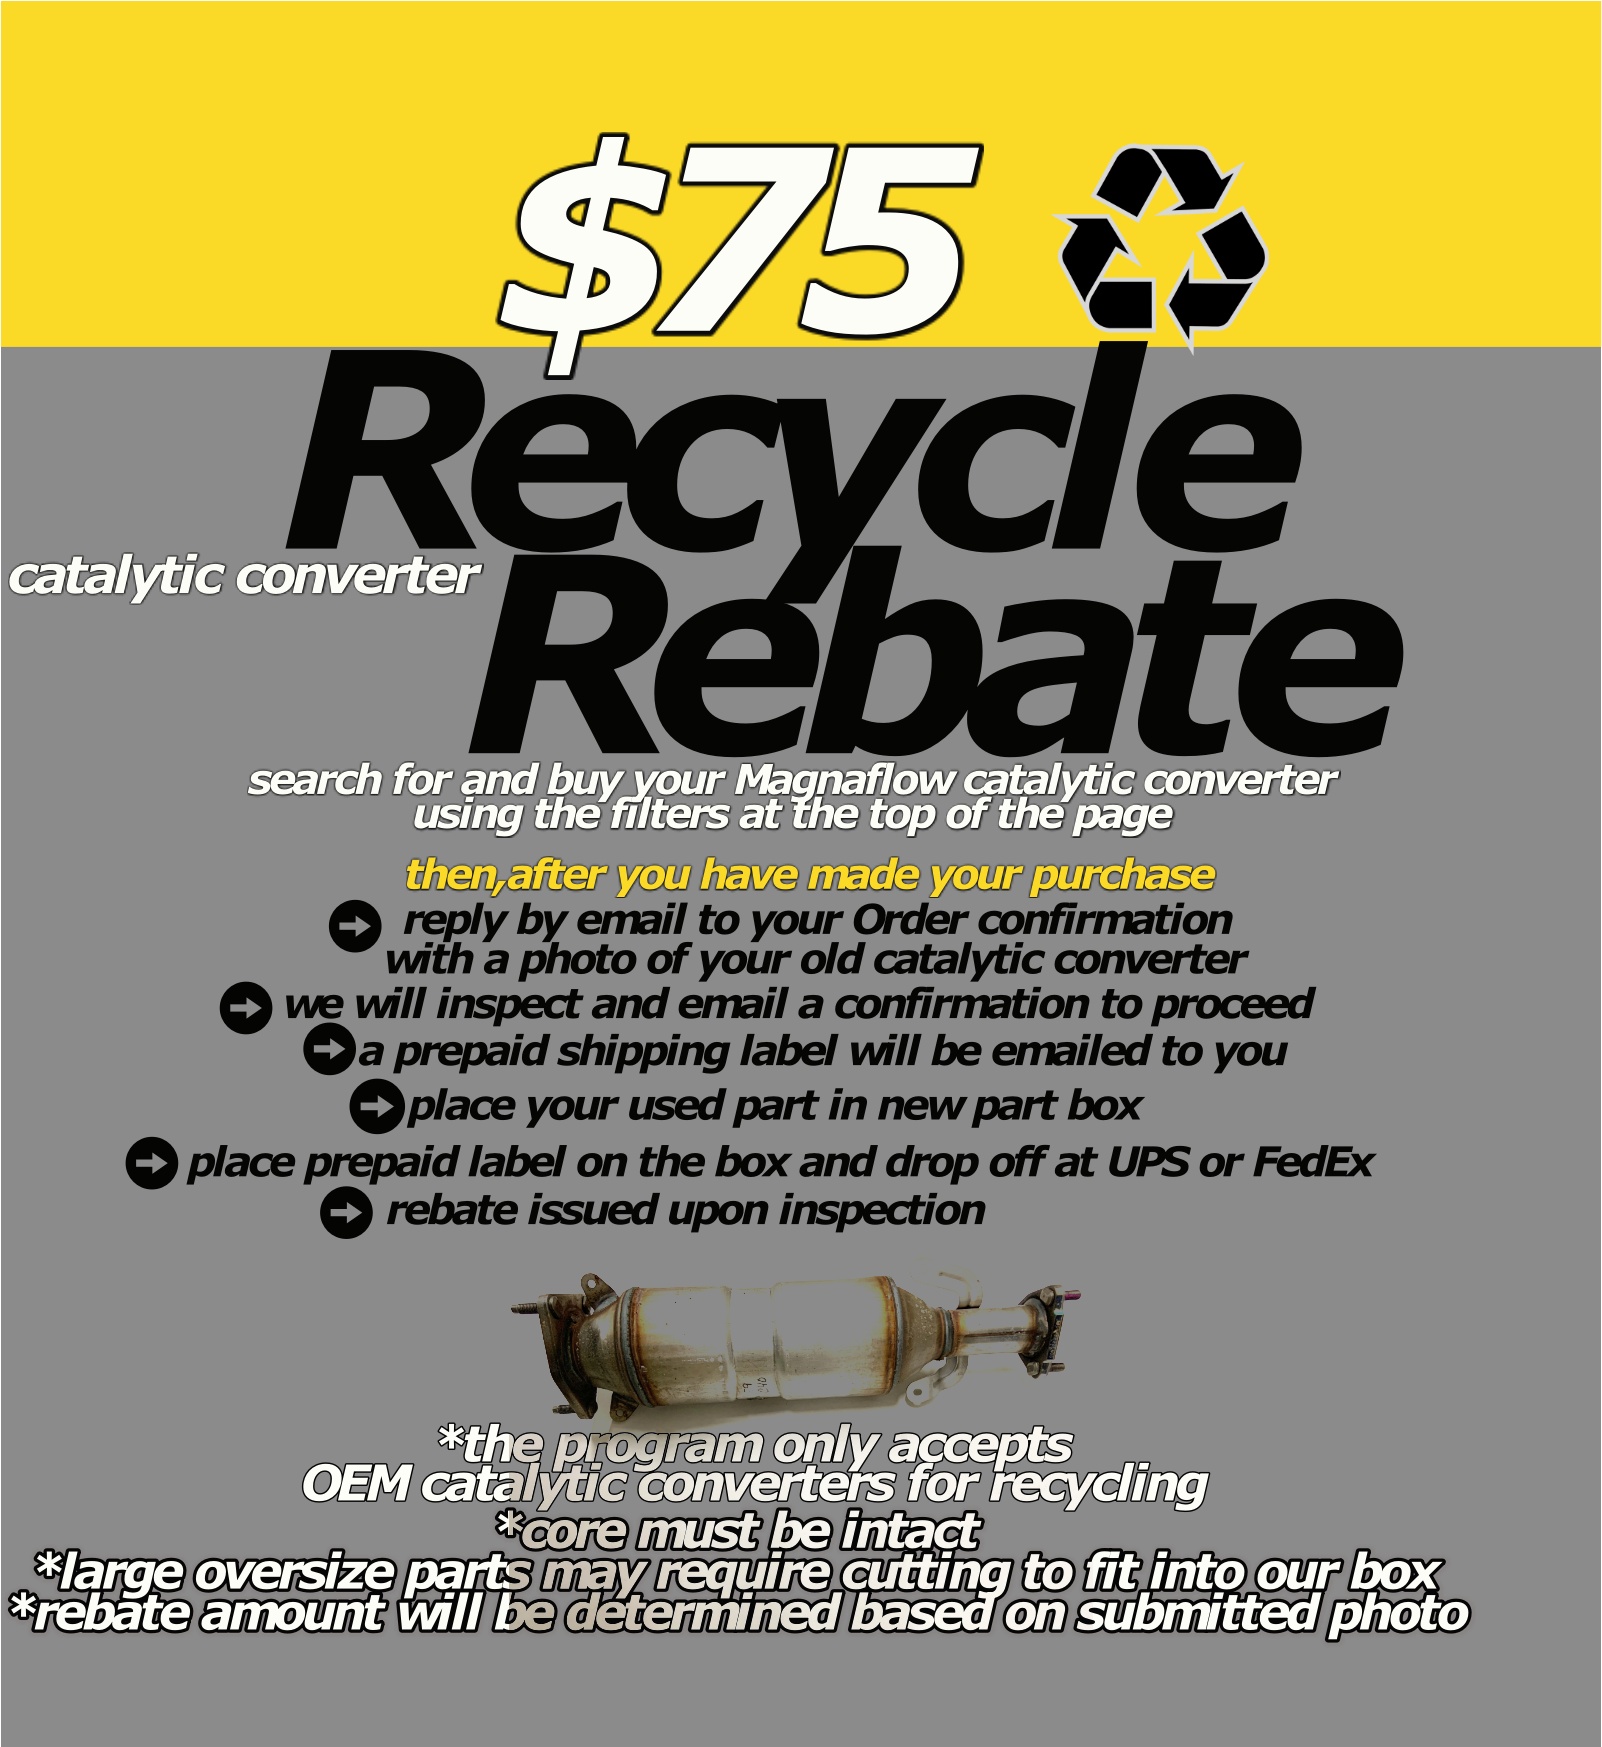 recycle-rebate-catalytic-converter-trade-in-program